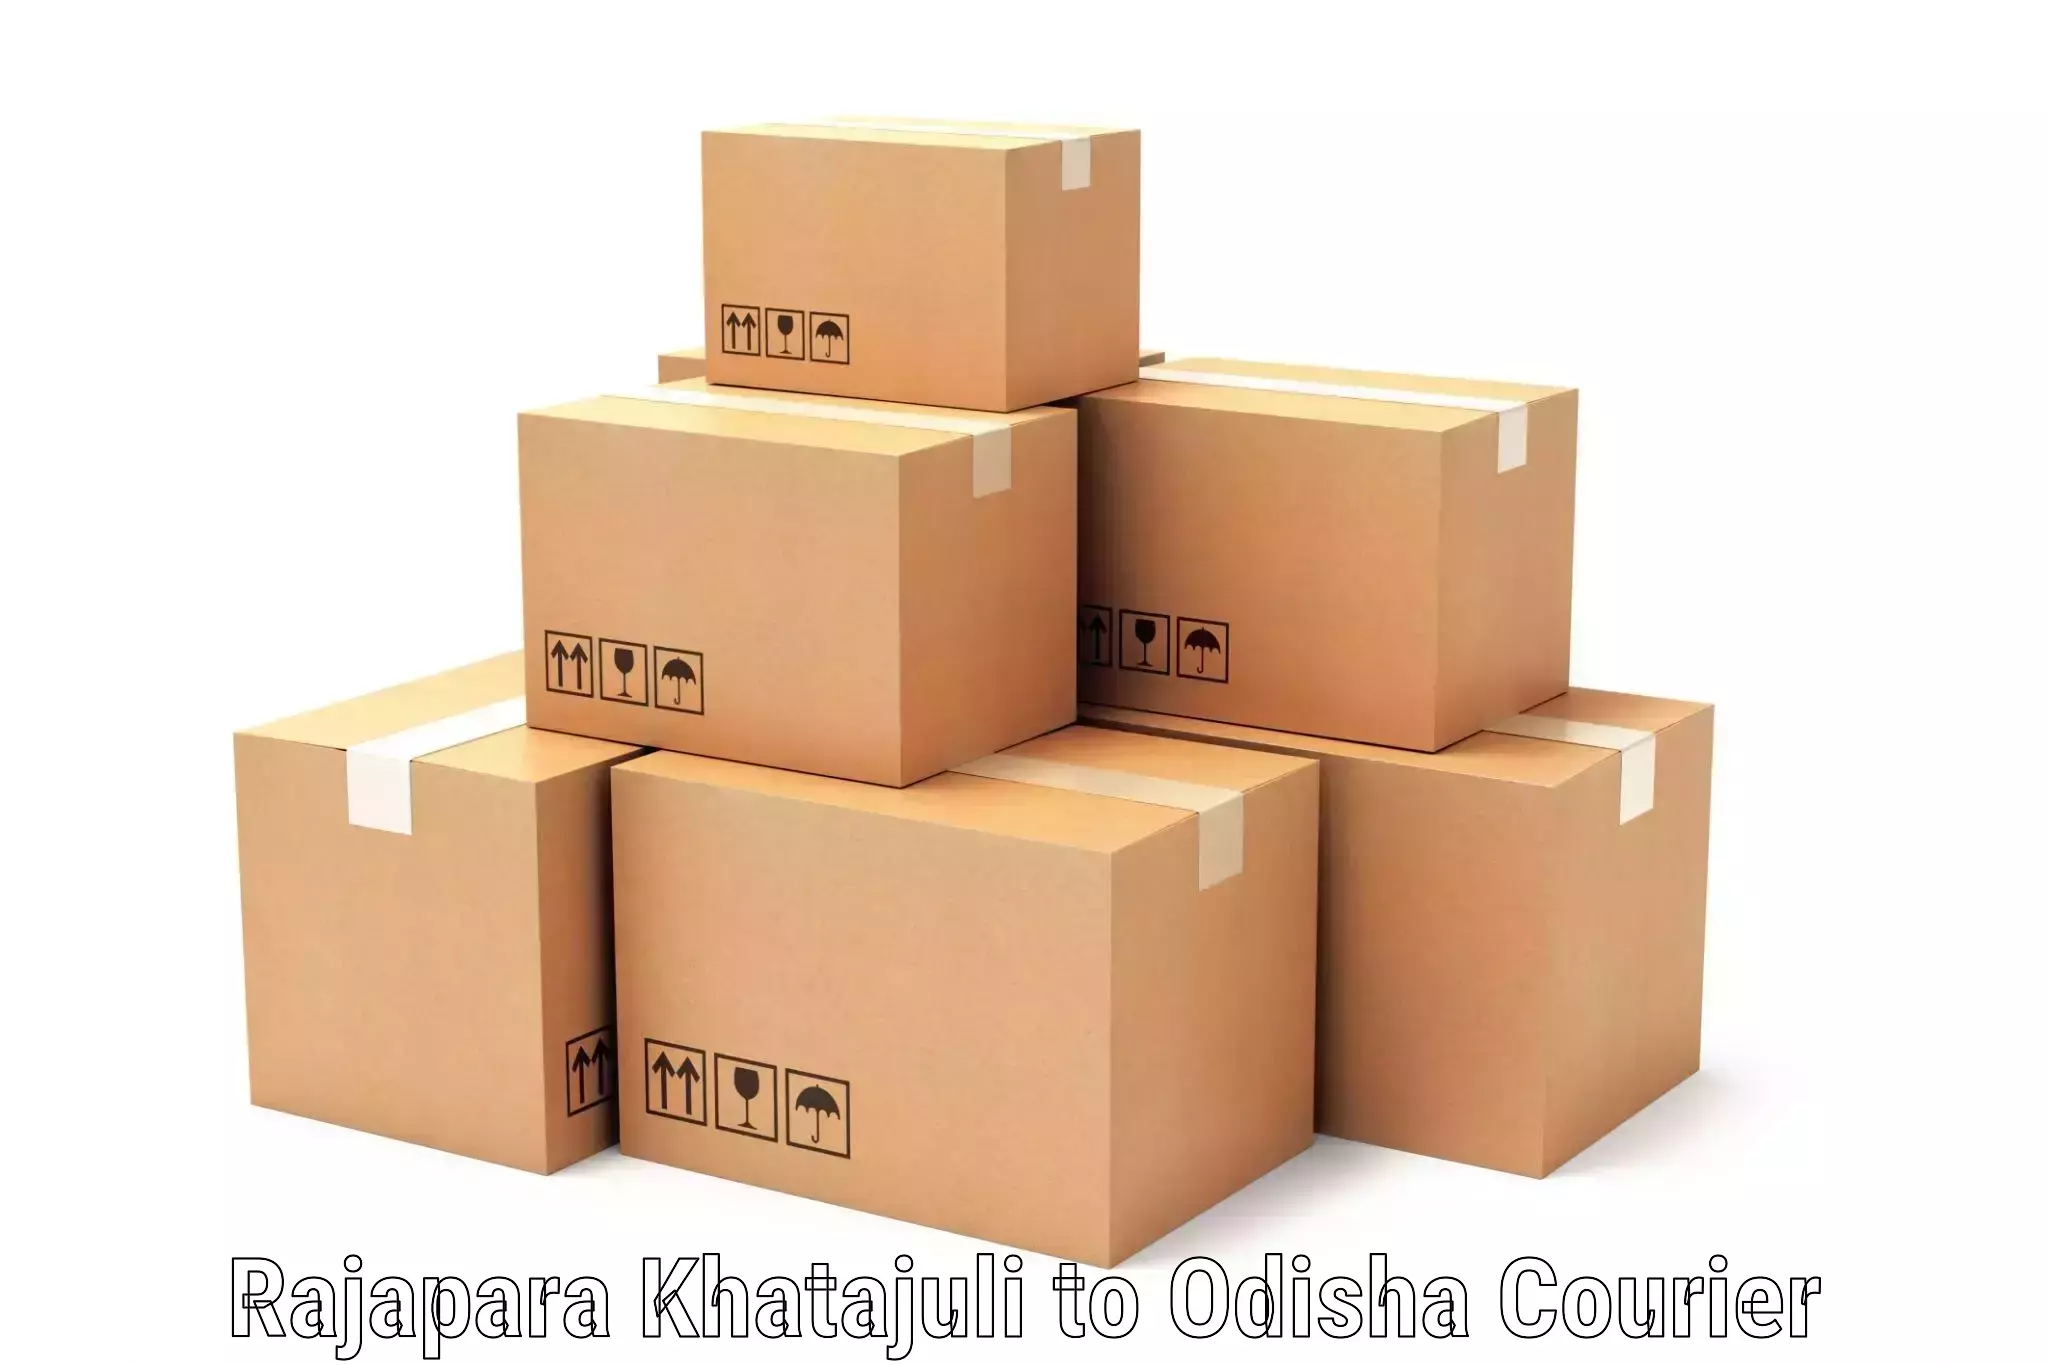 Cash on delivery service in Rajapara Khatajuli to Odisha